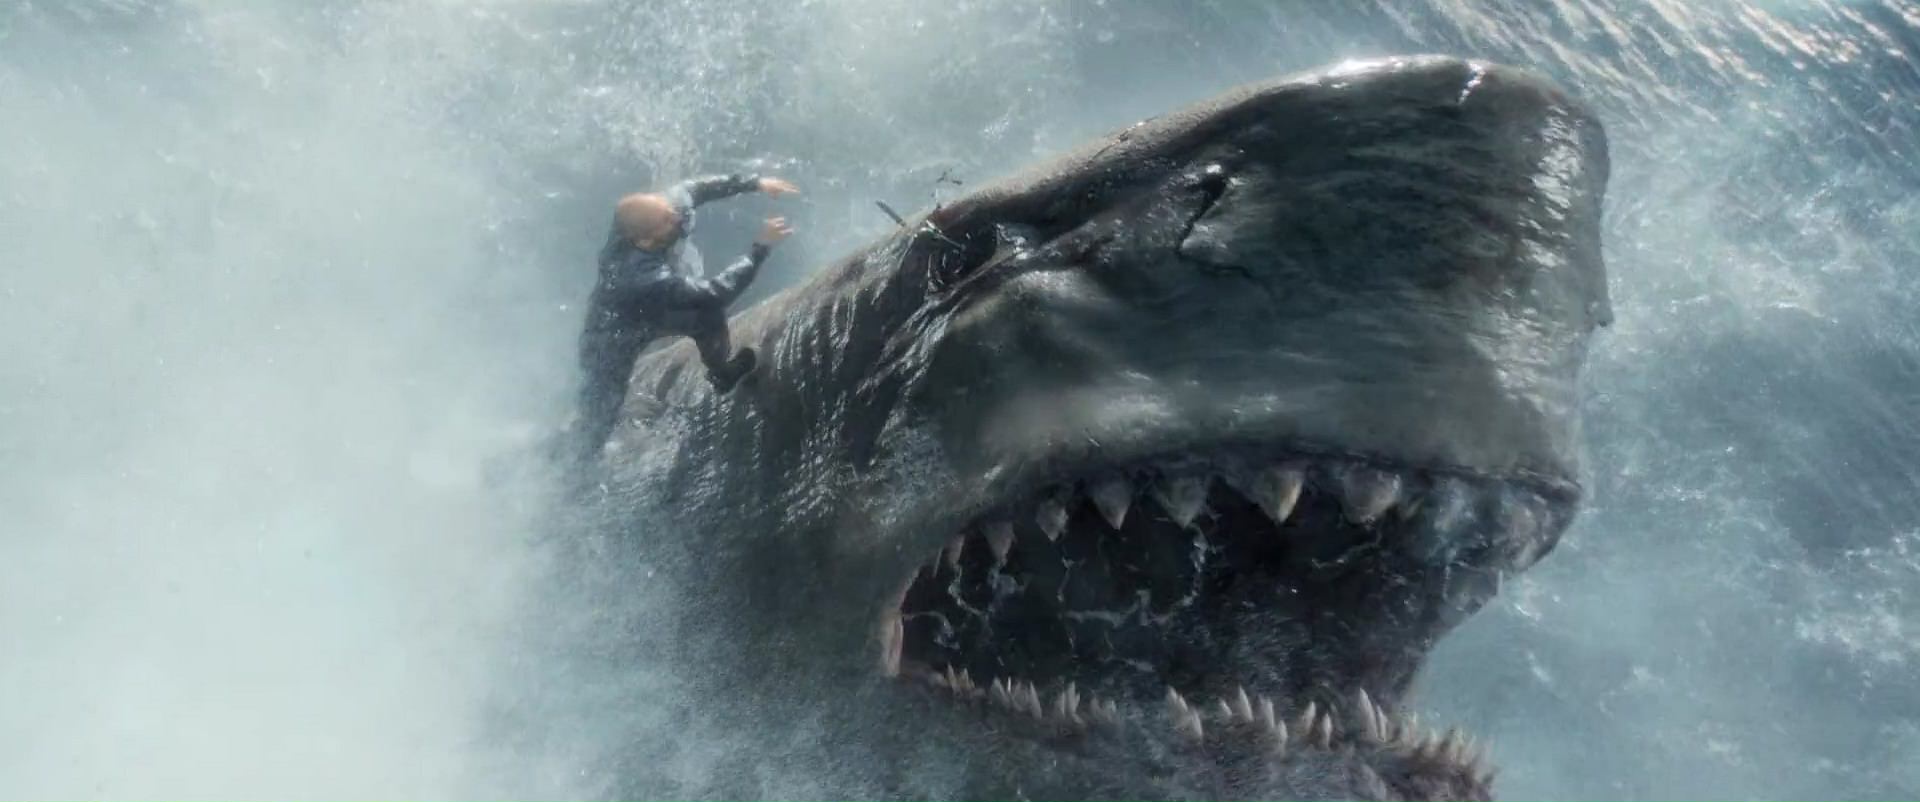 Jonas Taylor (Jason Statham) stabbing a megalodon shark in the eye with a spear in The Meg.